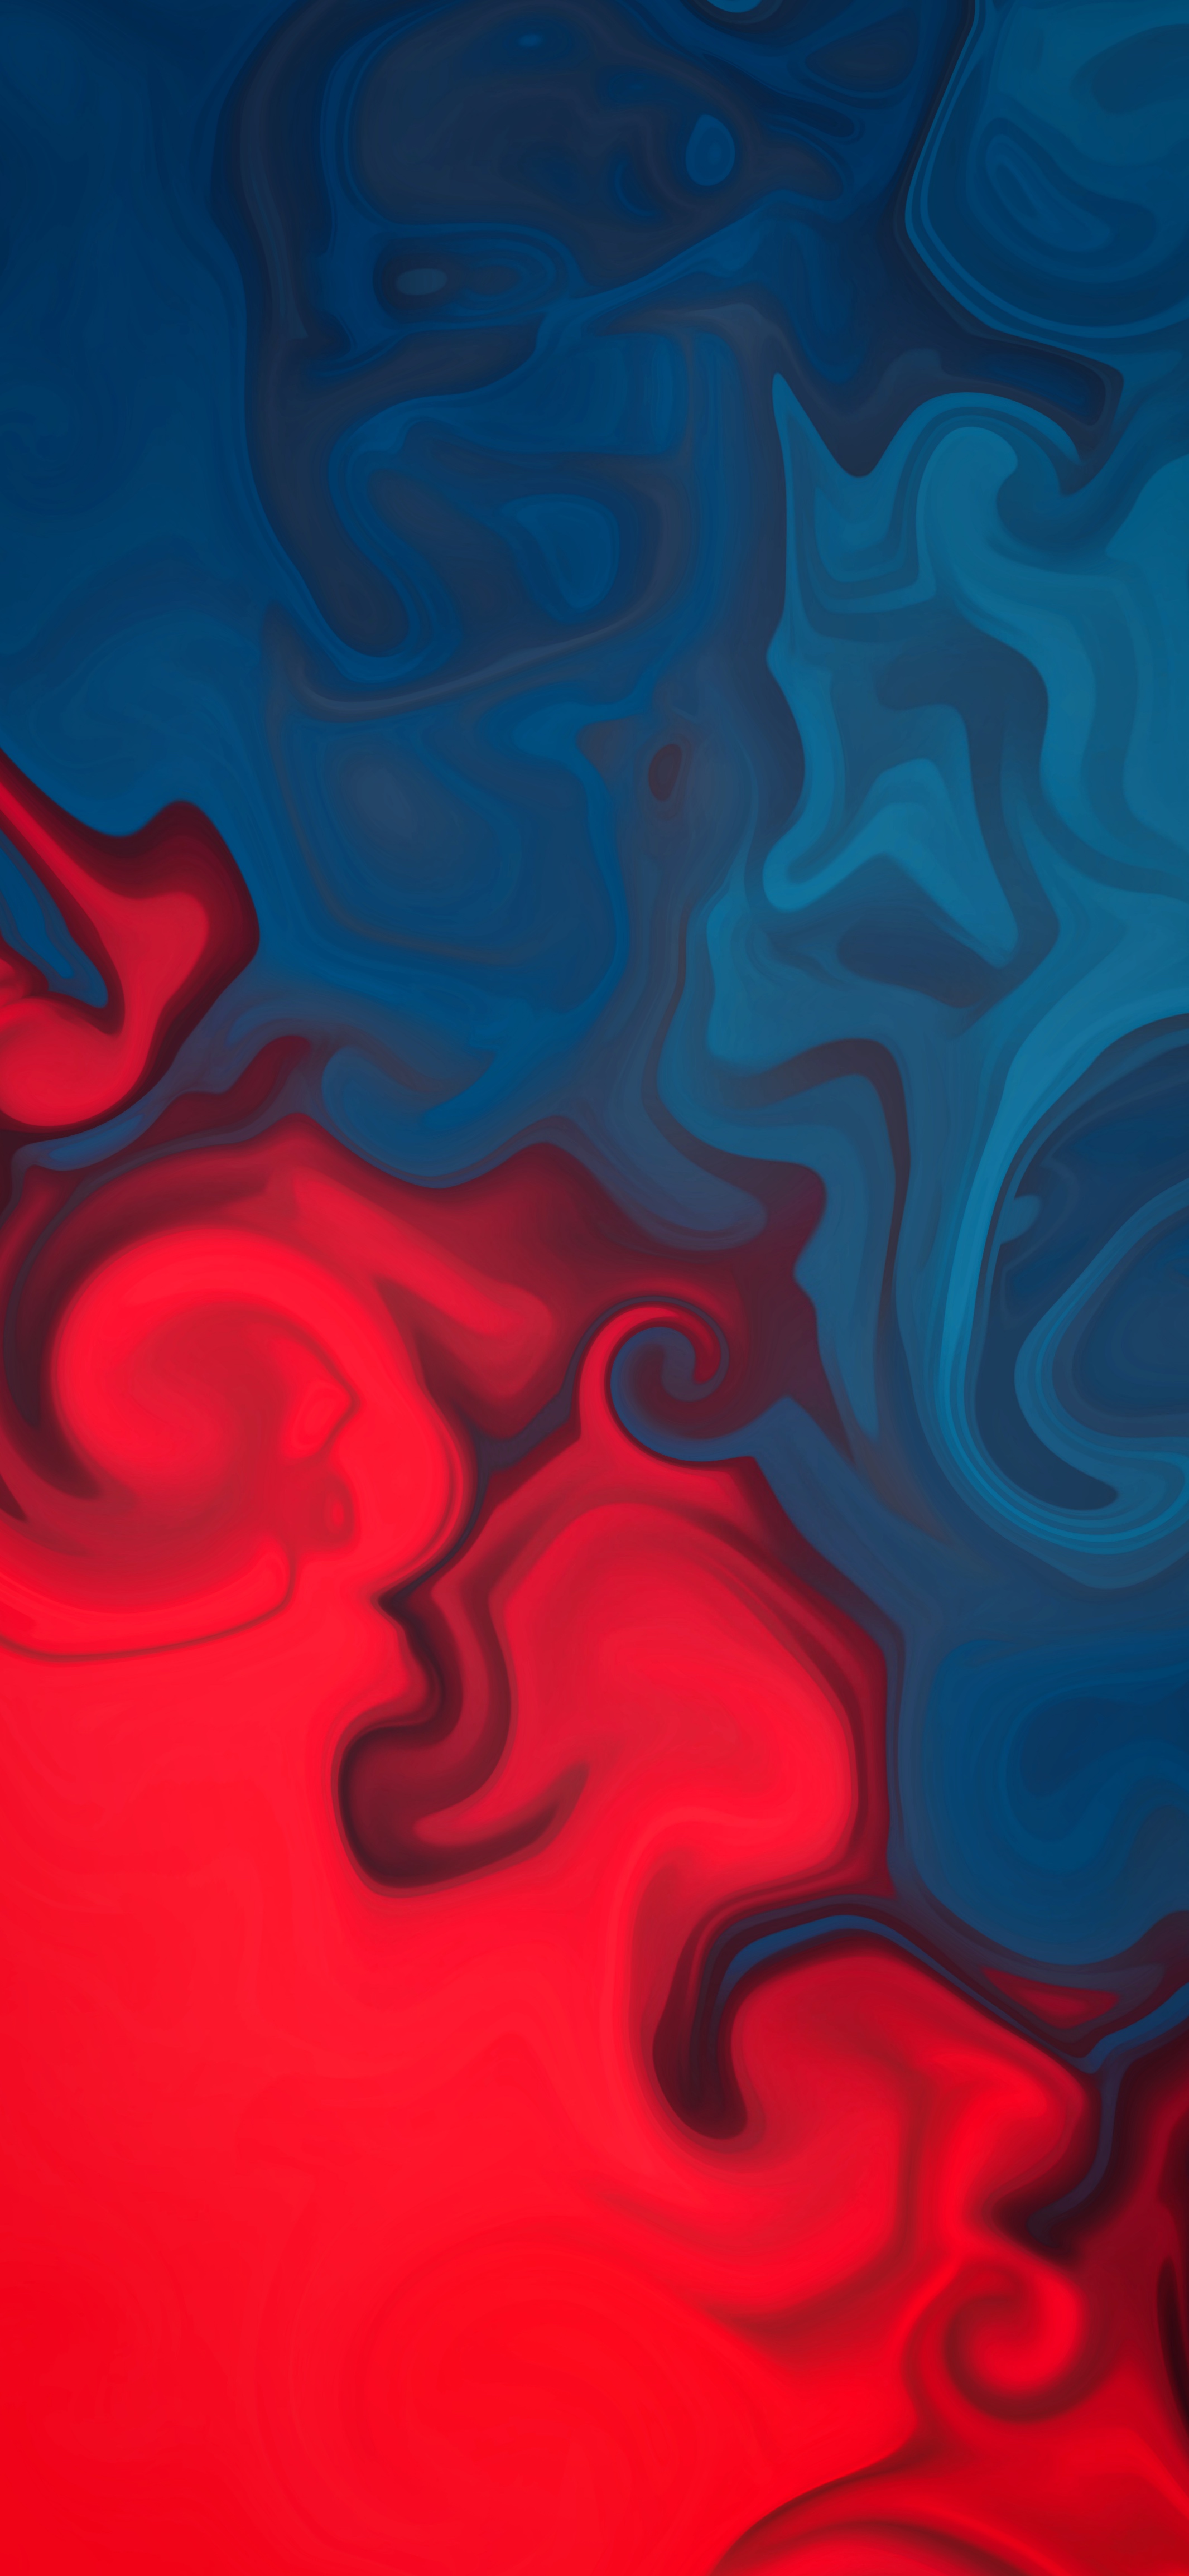 marbleized iphone wallpaper red blue swirl wallsbyjfl